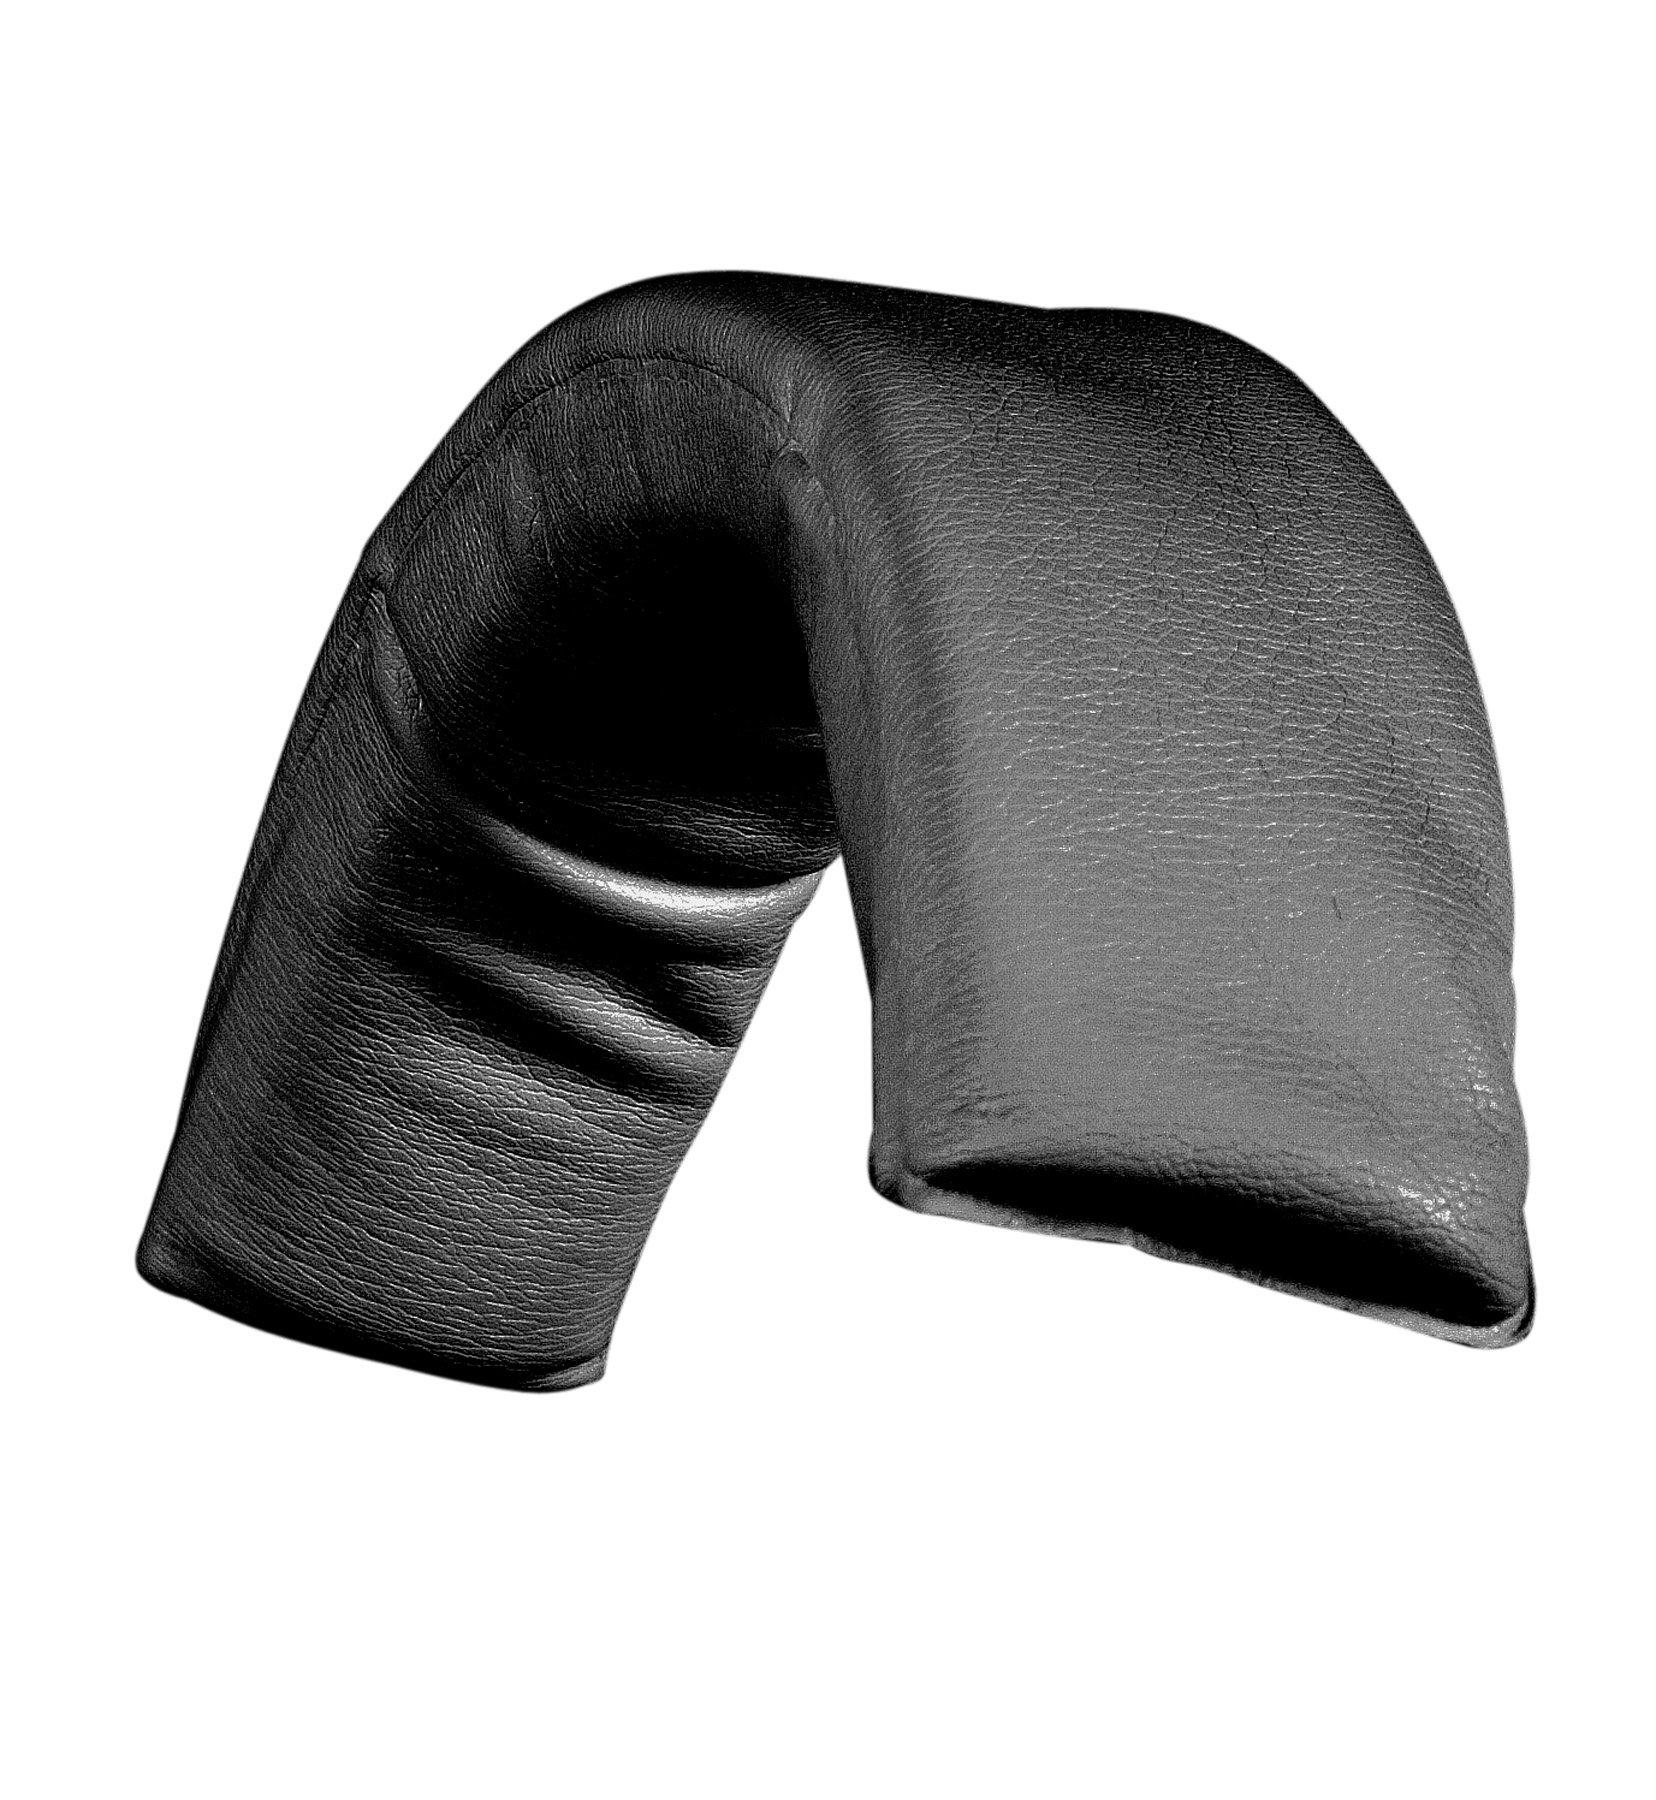 beyerdynamic leatherette Headband